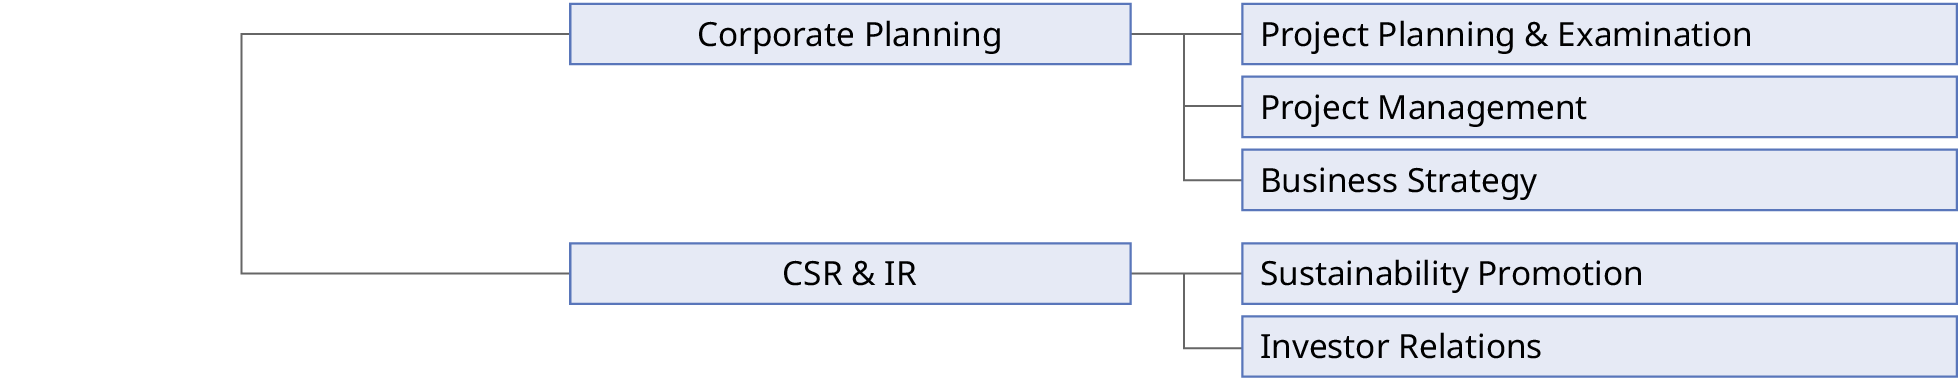 Figure: organization chart 3. it shows corporate planning and CSR & IR.